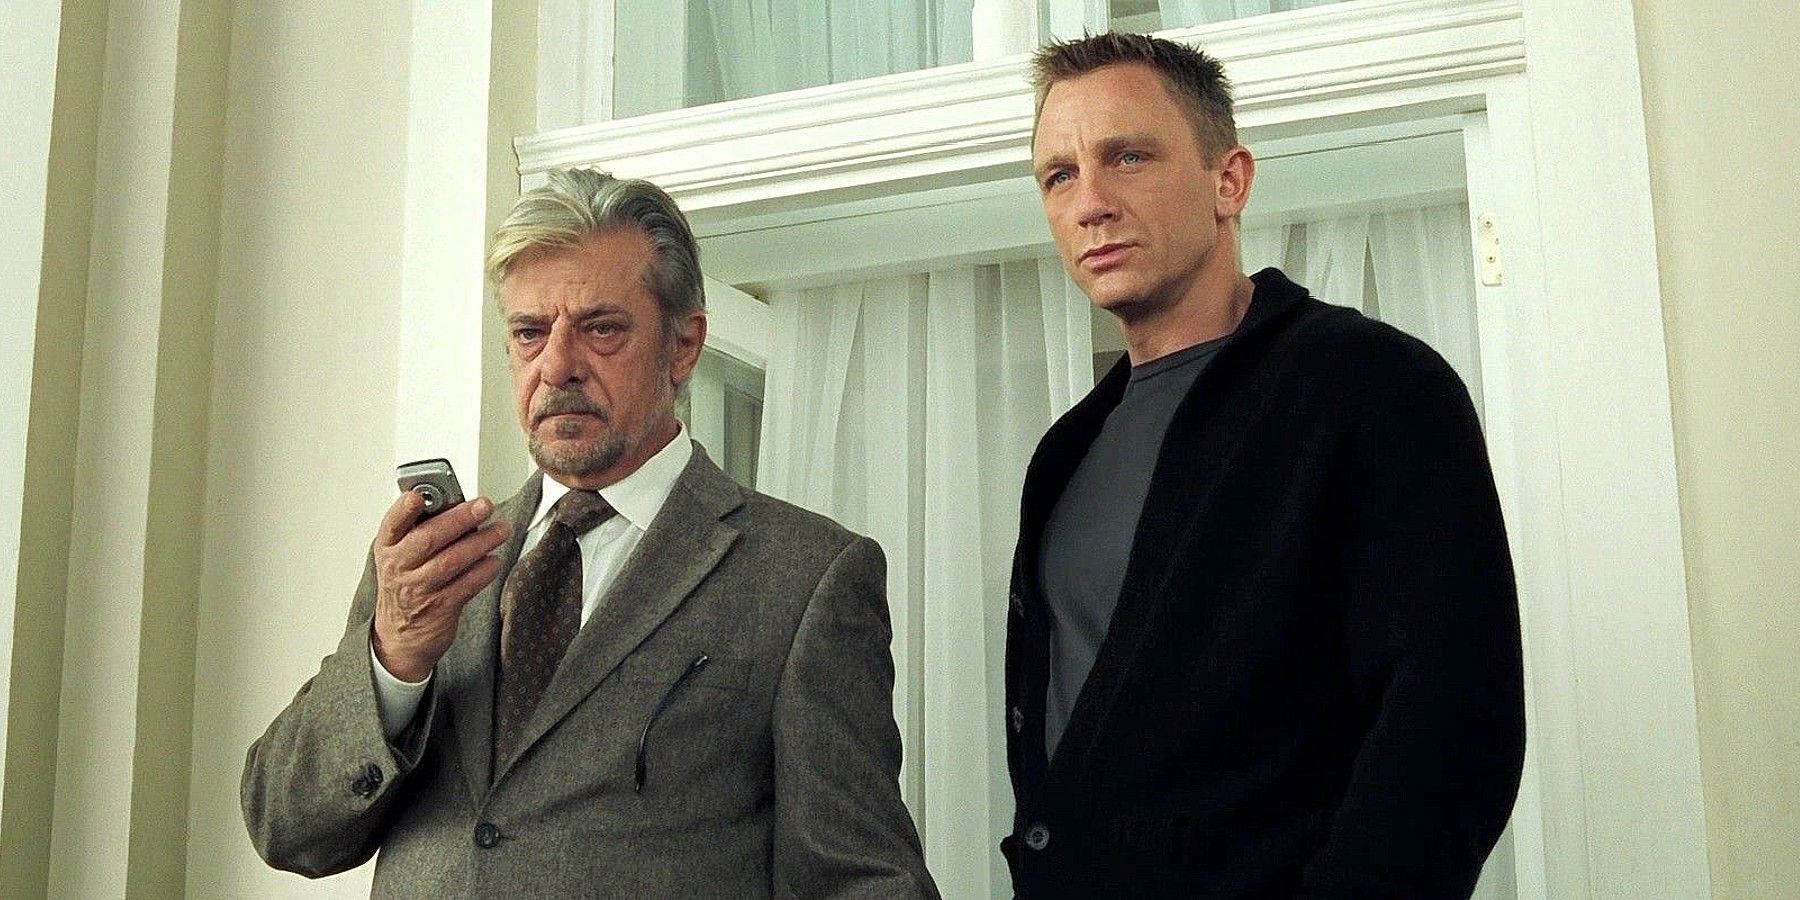 Casino Royale - James Bond/Daniel Craig and Mathis